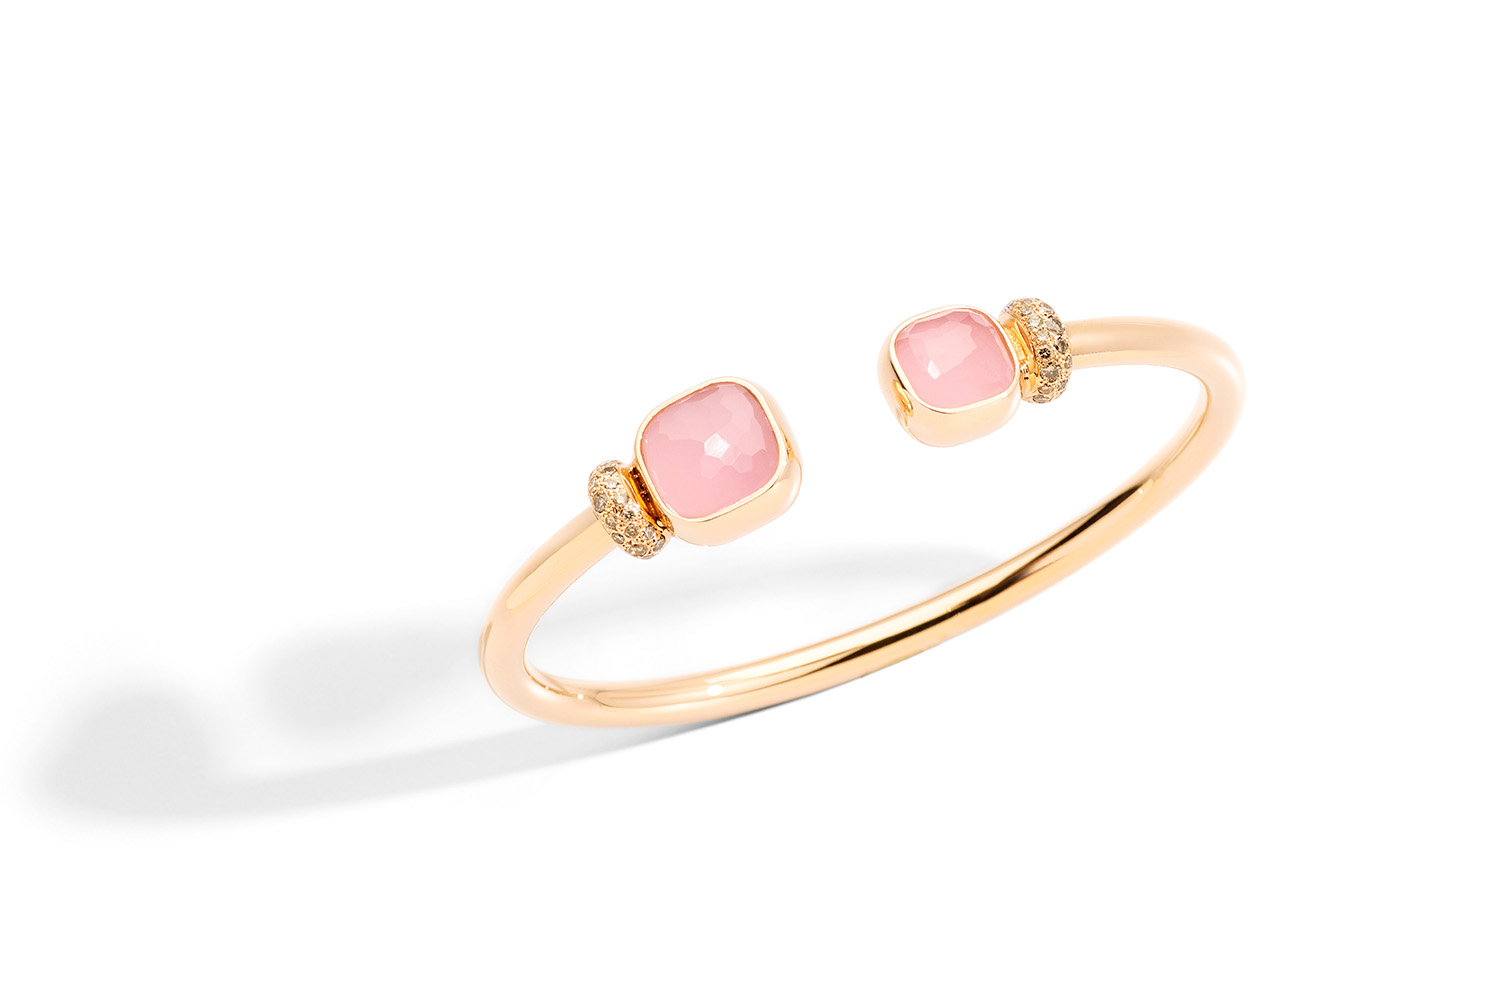 NUDO-bracelet-in-rose-gold-with-rose-quartz-and-brown-diamonds-by-Pomellato-–-kopia